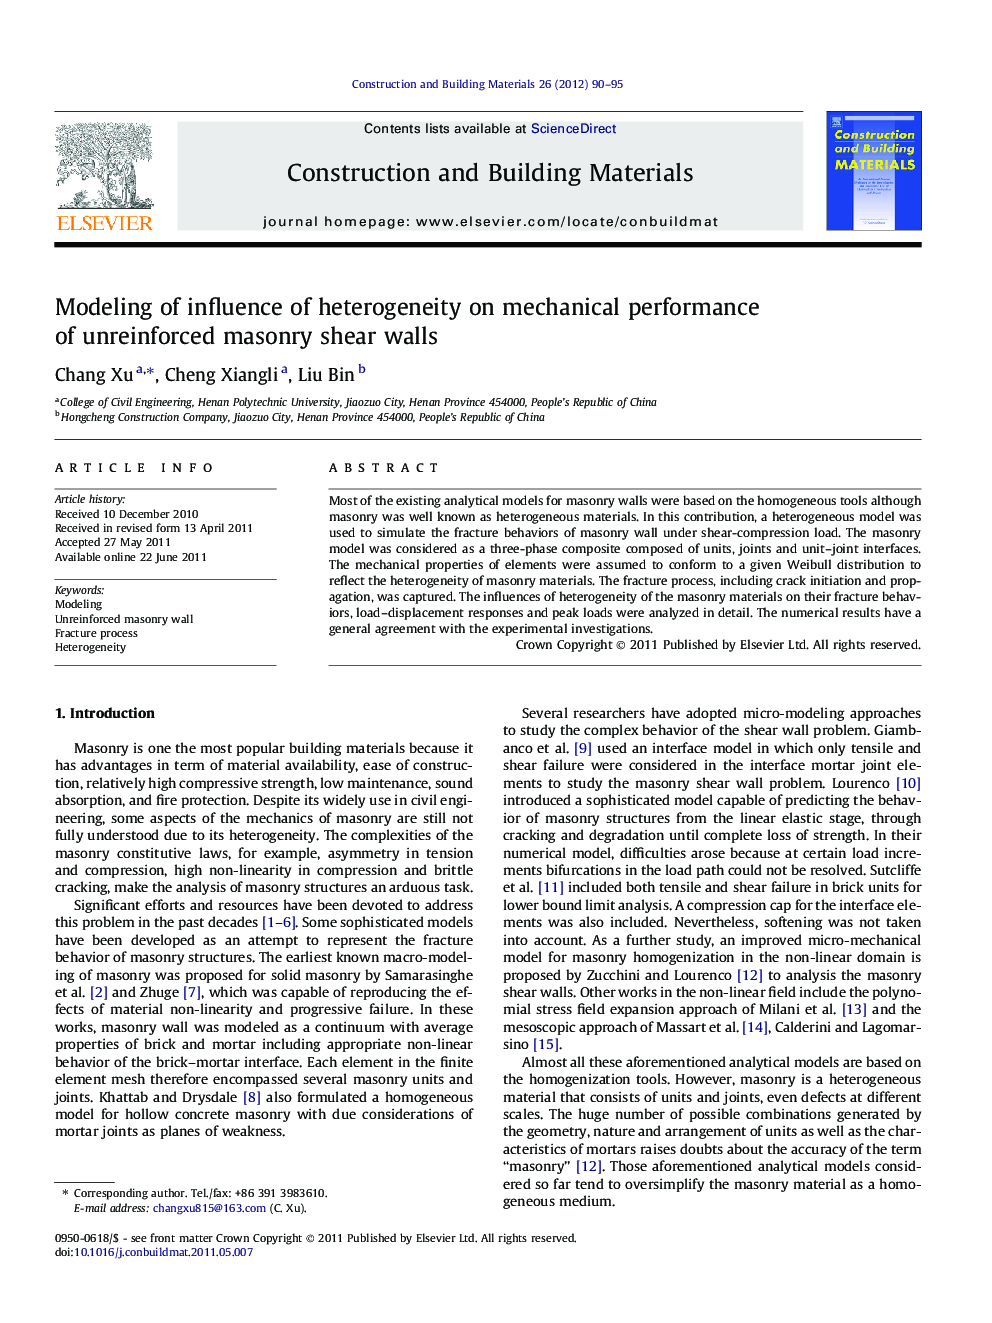 Modeling of influence of heterogeneity on mechanical performance of unreinforced masonry shear walls